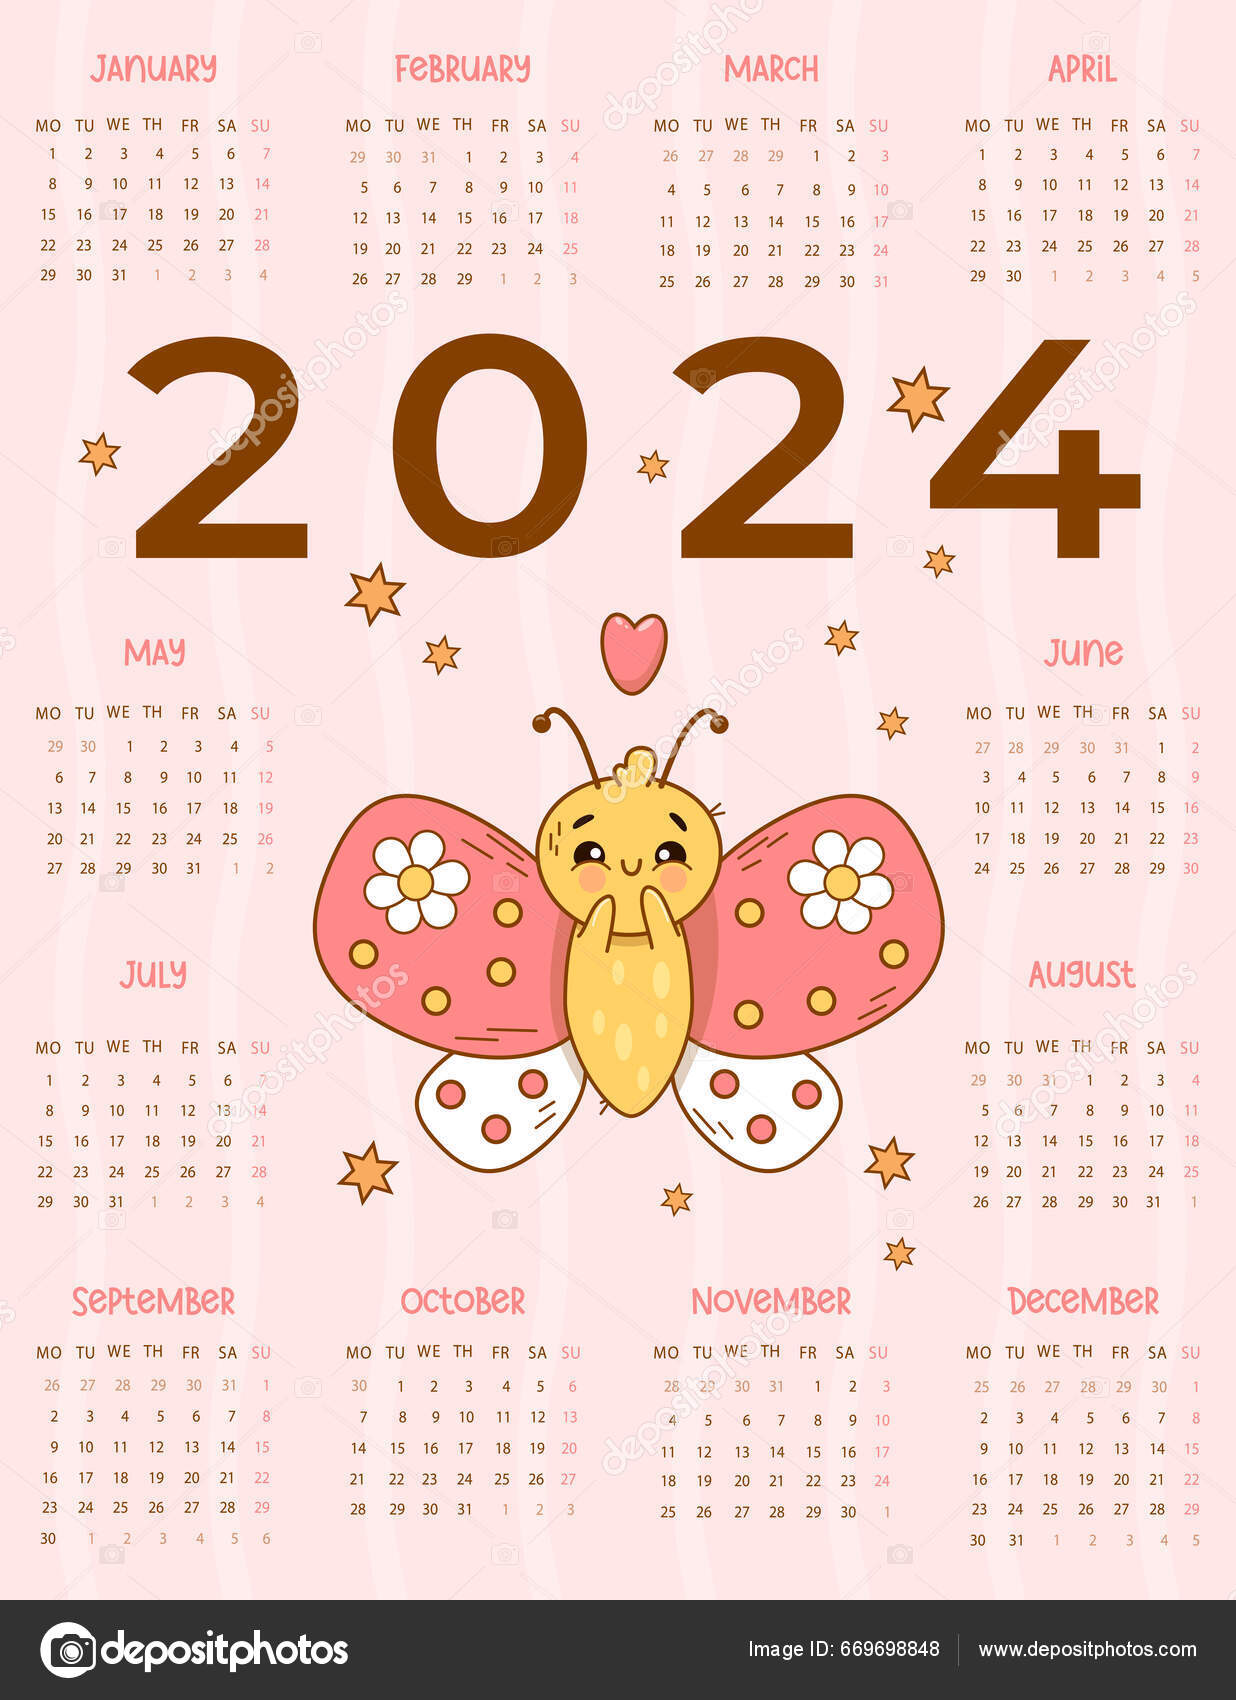 https://st5.depositphotos.com/35798576/66969/v/1600/depositphotos_669698848-stock-illustration-calendar-2024-cute-enamored-butterfly.jpg